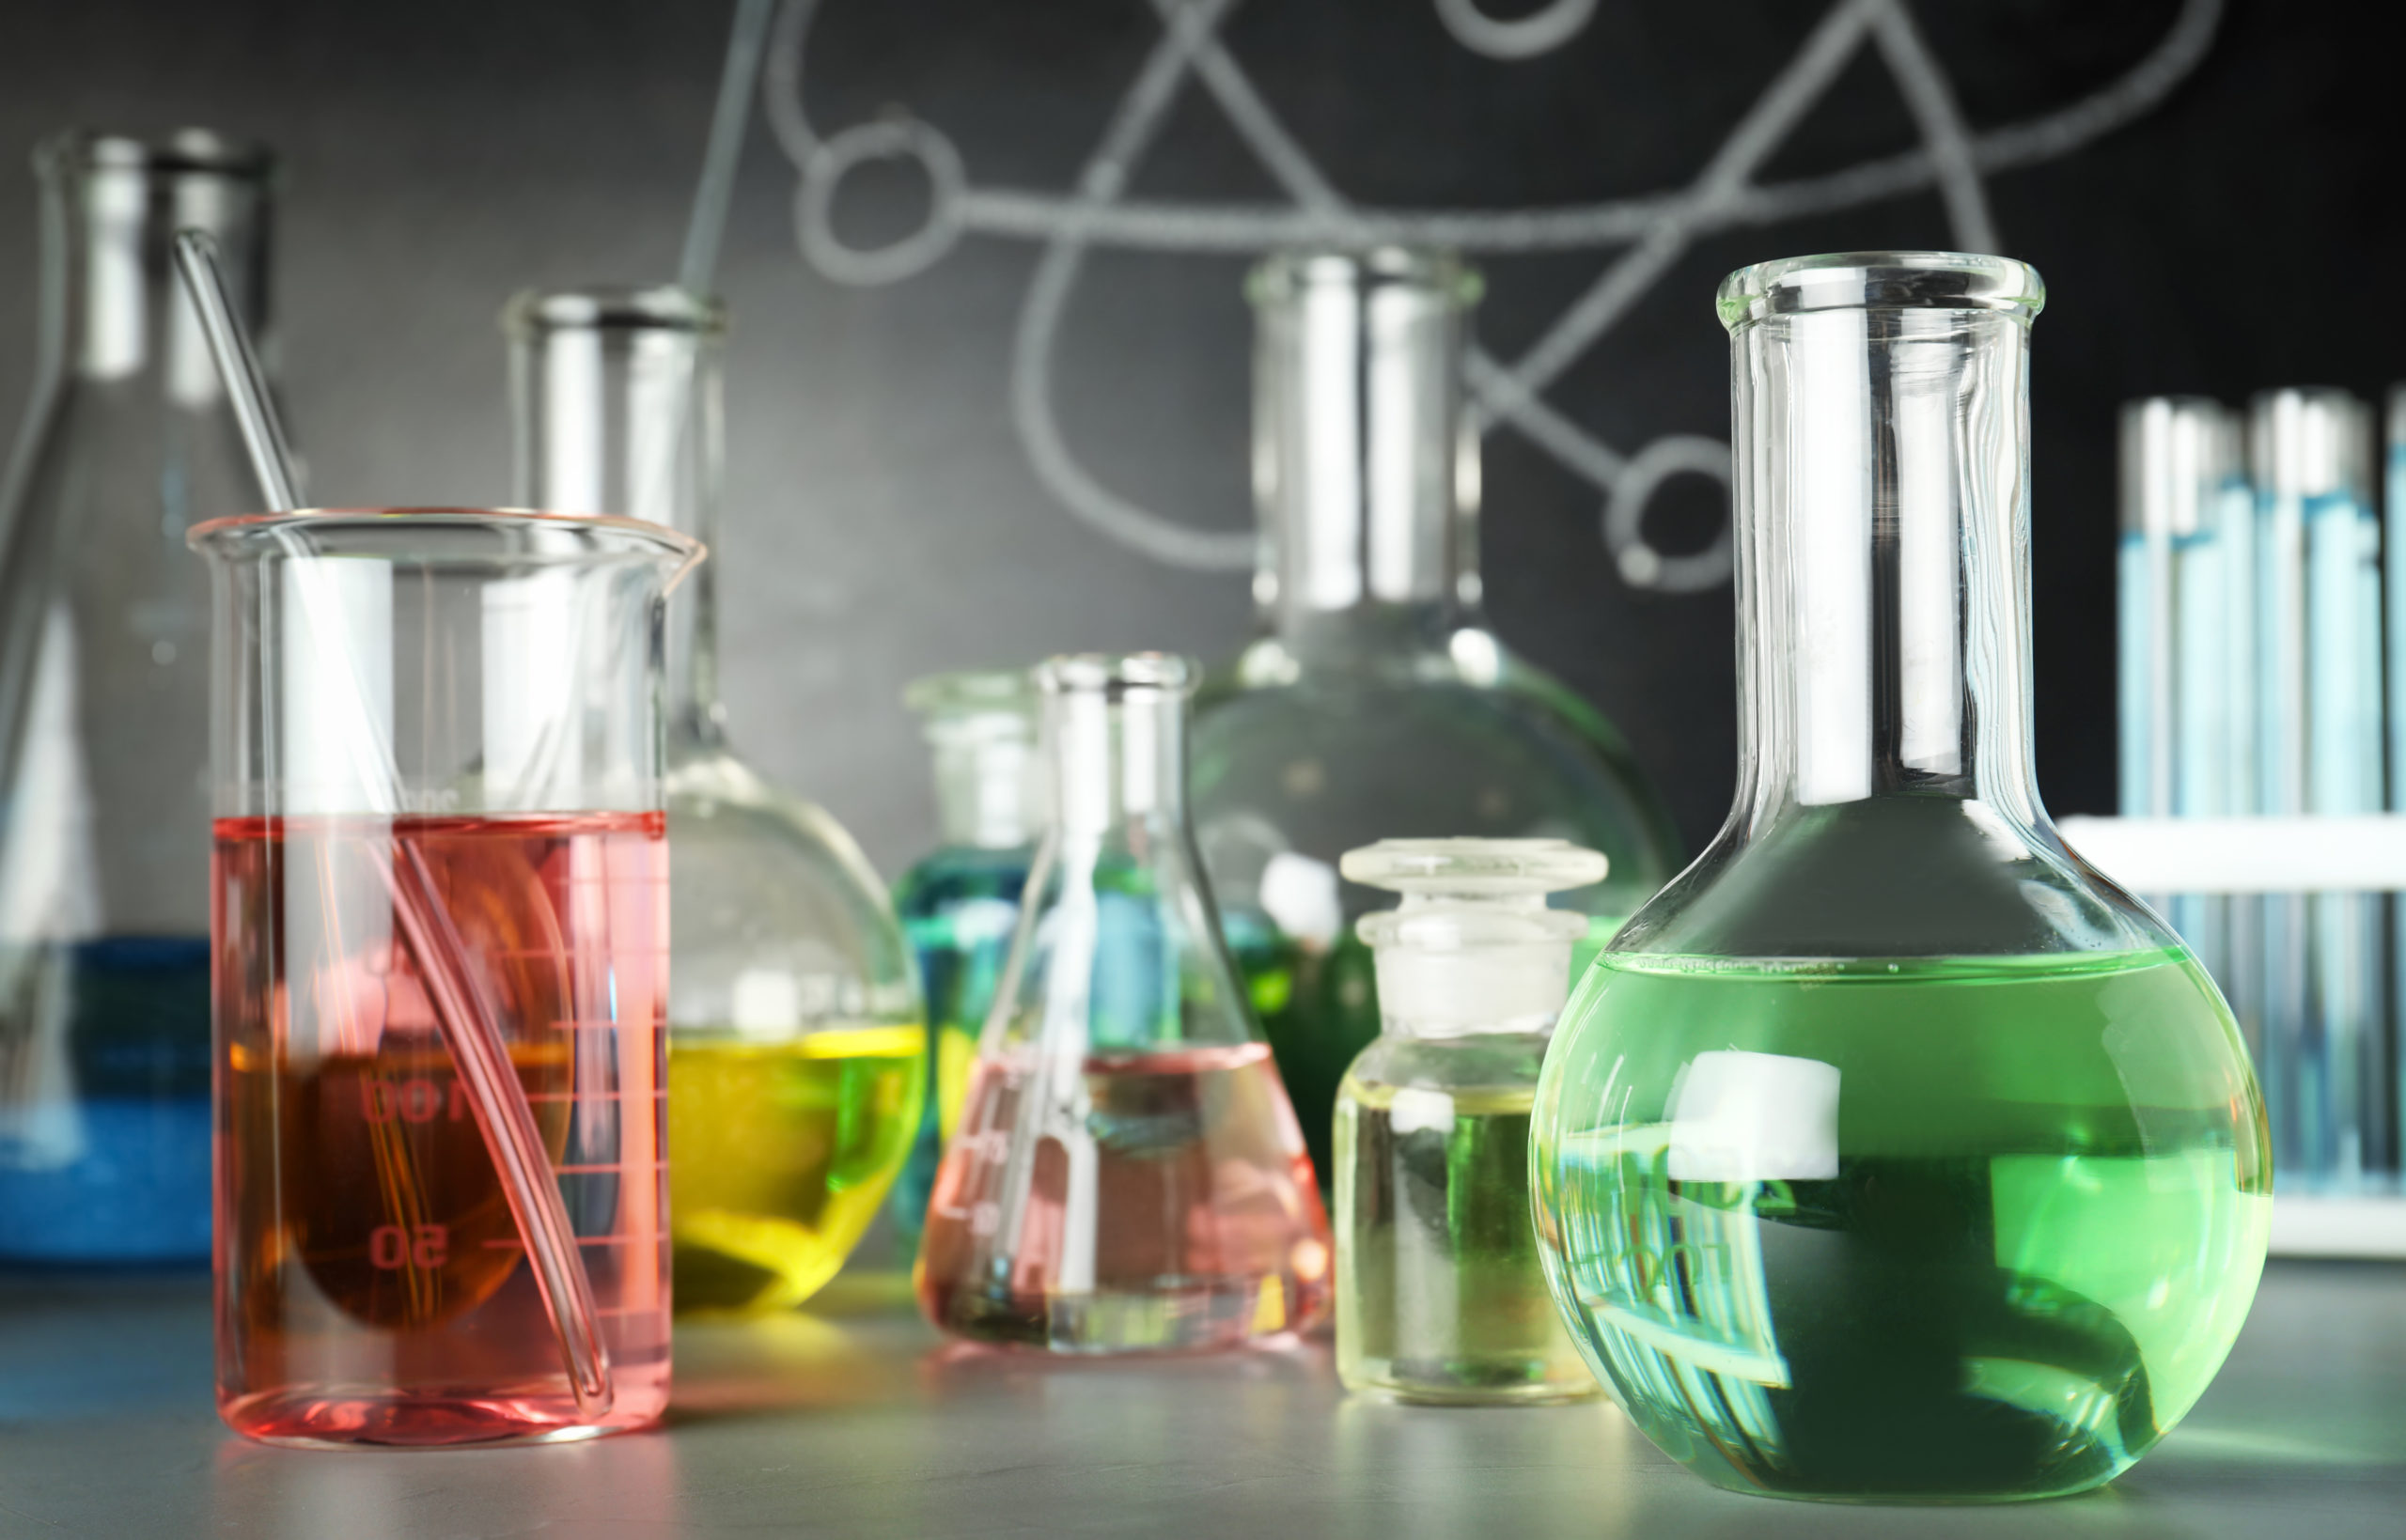 Laboratory glassware on table near chalkboard. Chemistry concept